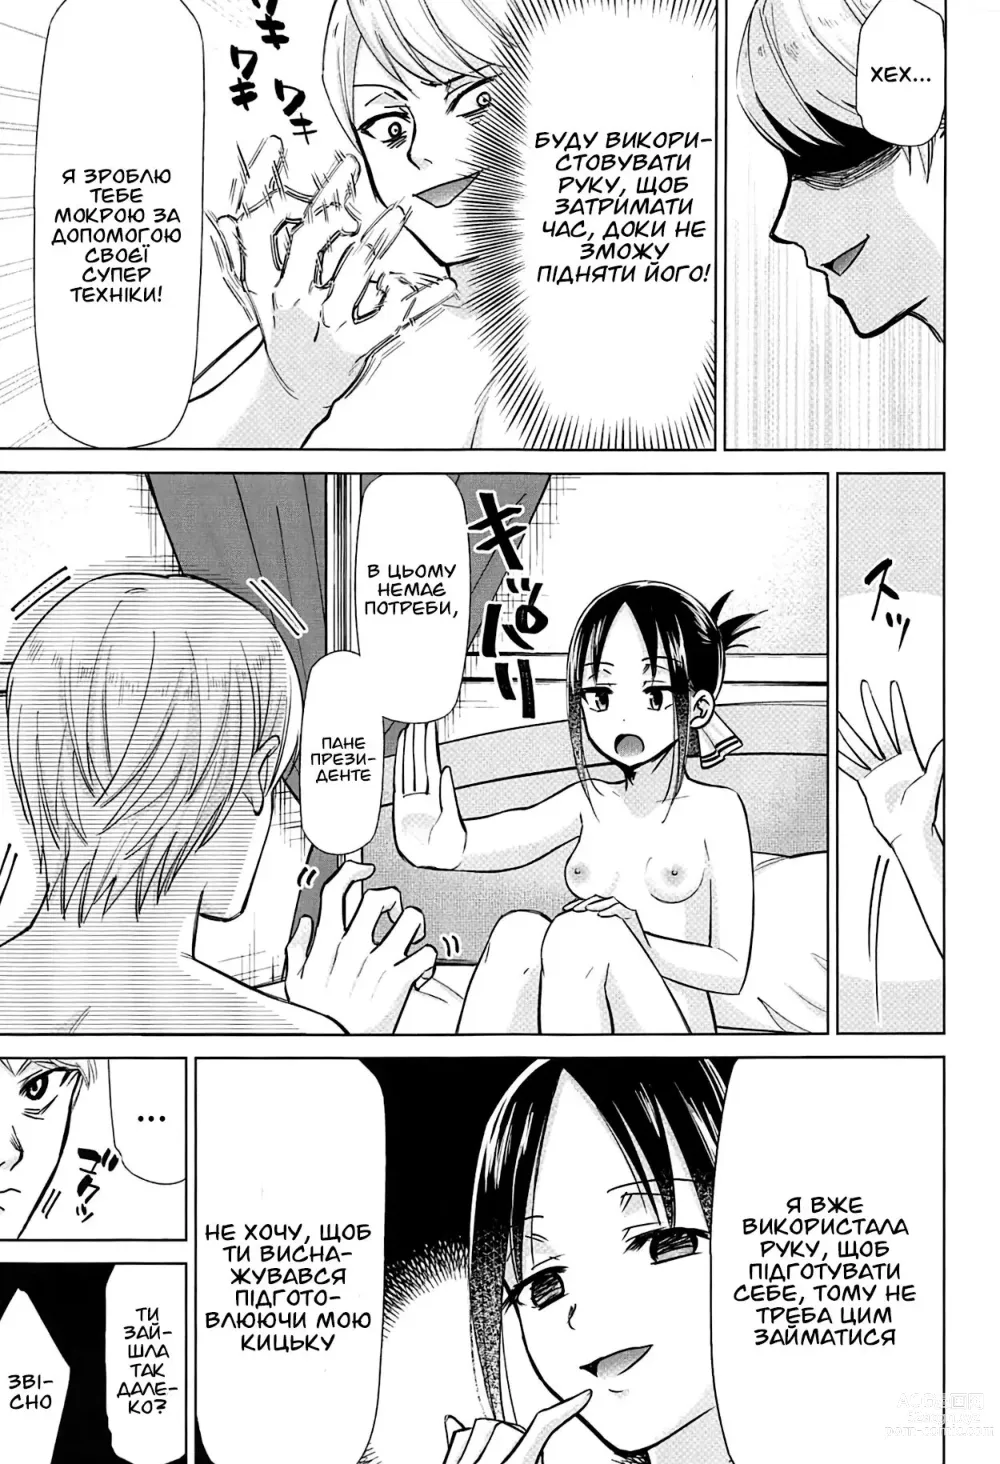 Page 6 of doujinshi Каґуя-сама хоче змусити його кінчити